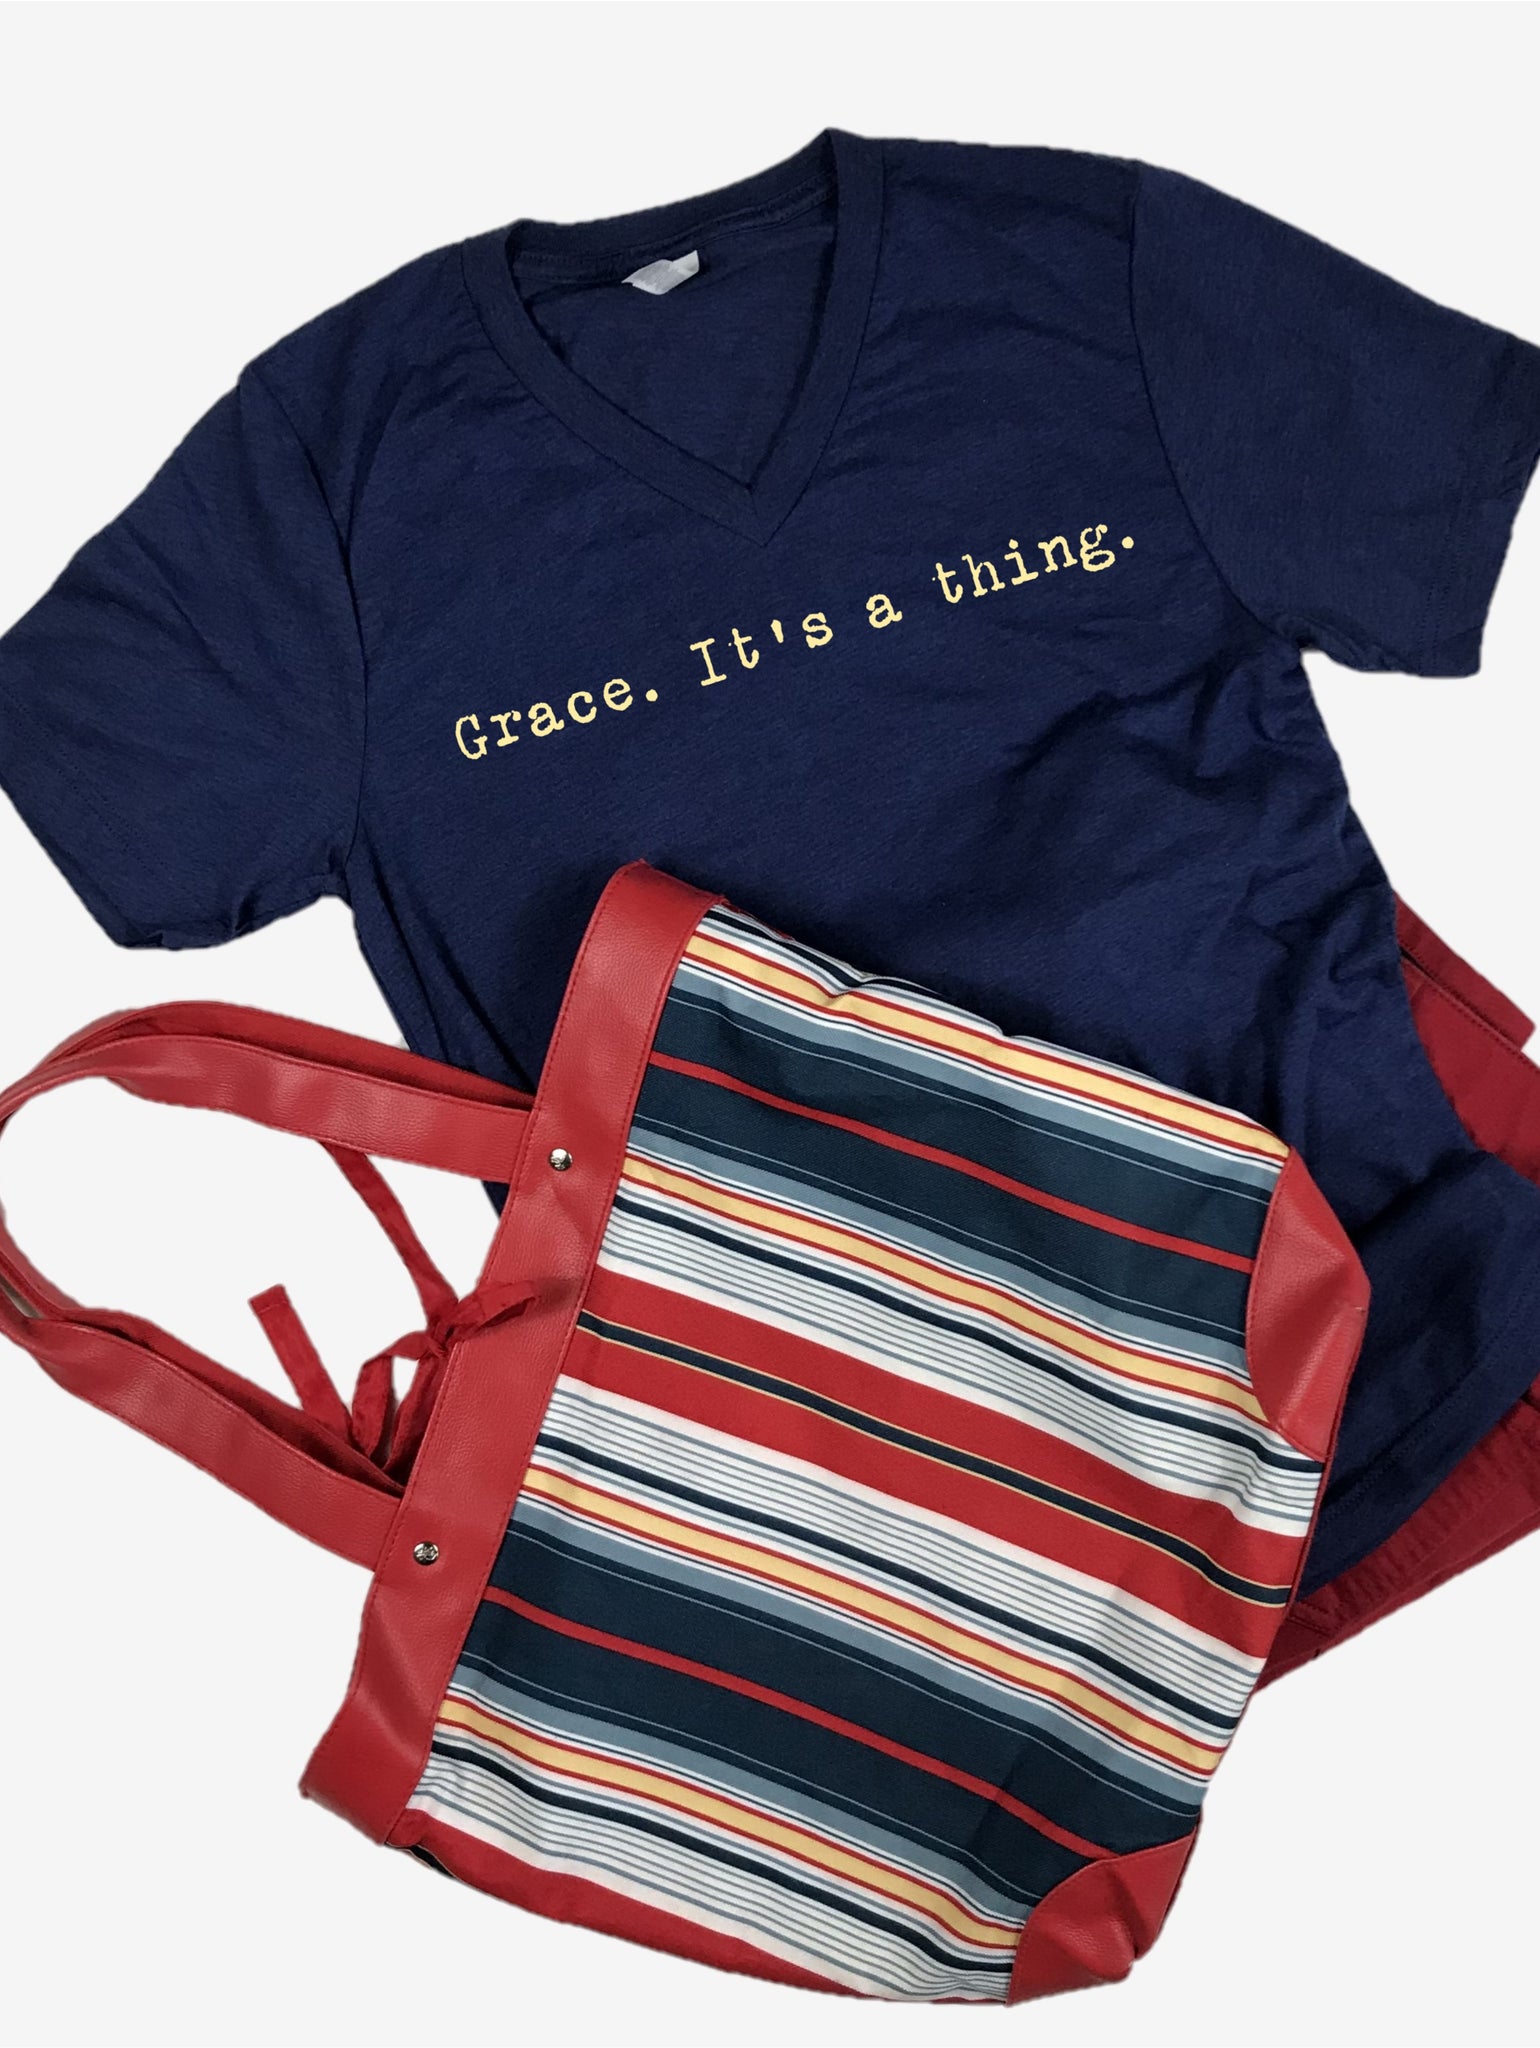 "Grace. It's a thing." Short Sleeve Tee Shirt, V-Neck, Navy Tri-Blend